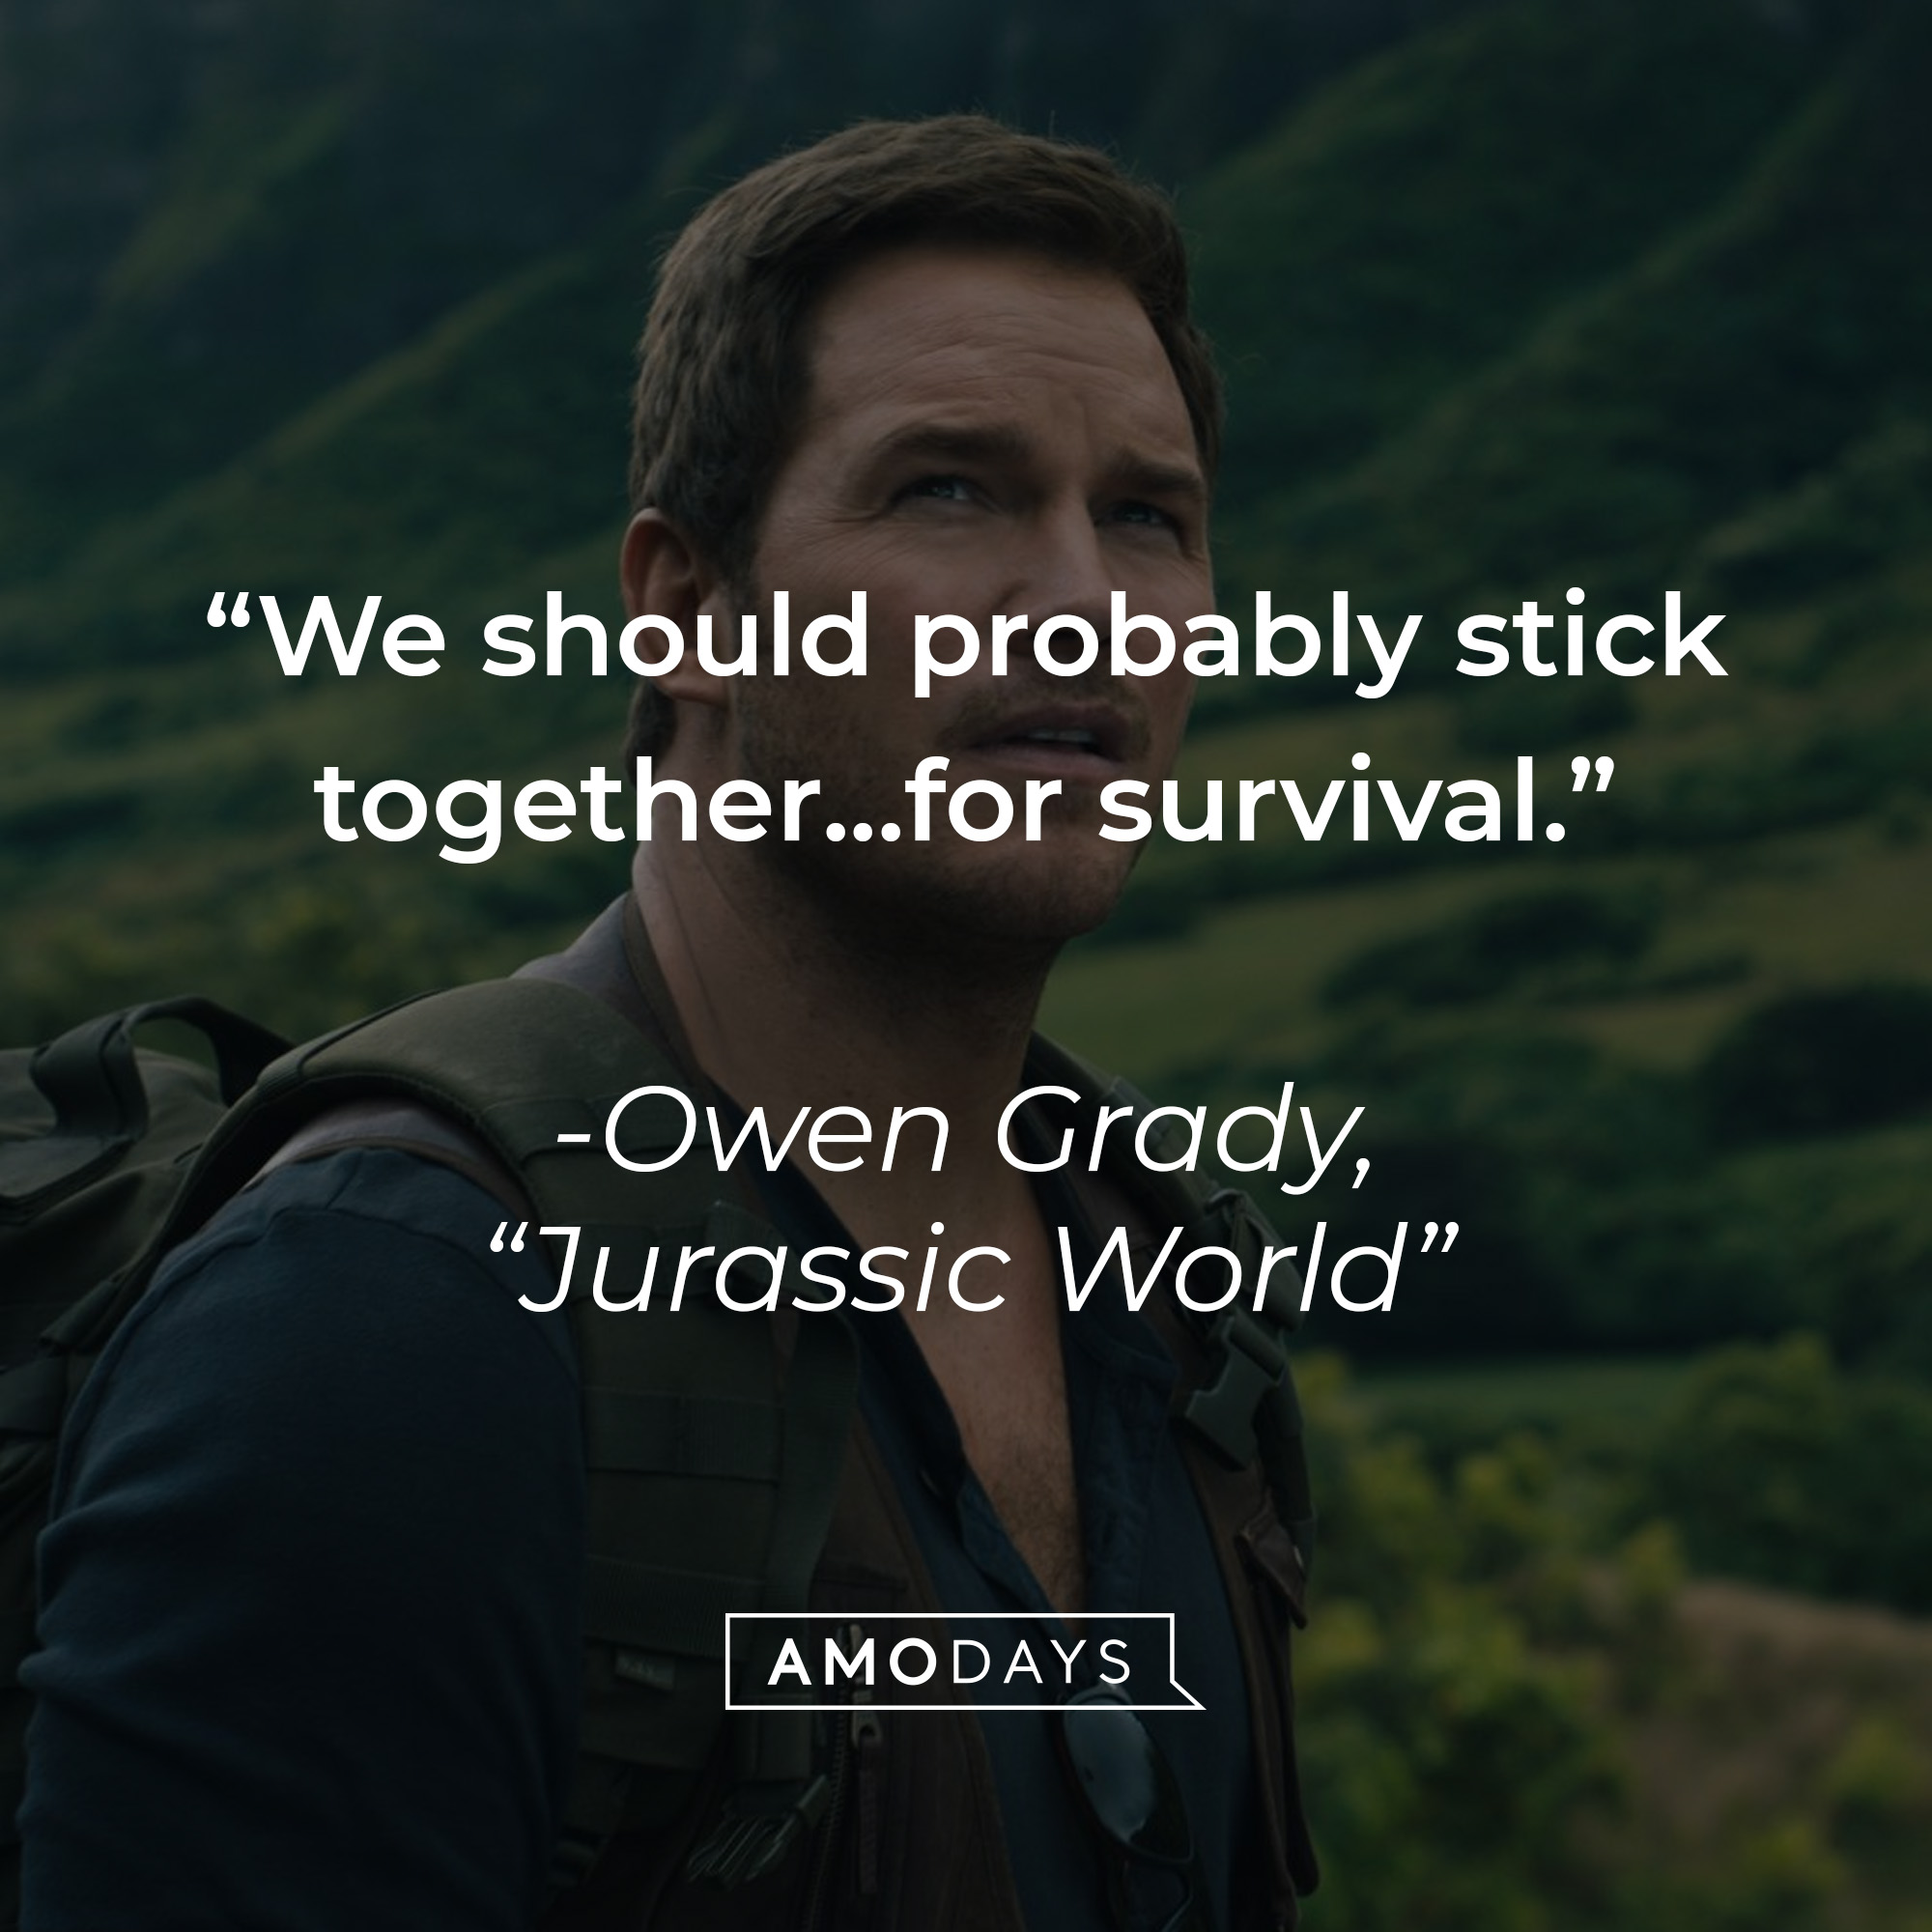 Owen Grady's Quote: "We should probably stick together...for survival." | Source: facebook.com/JurassicWorld